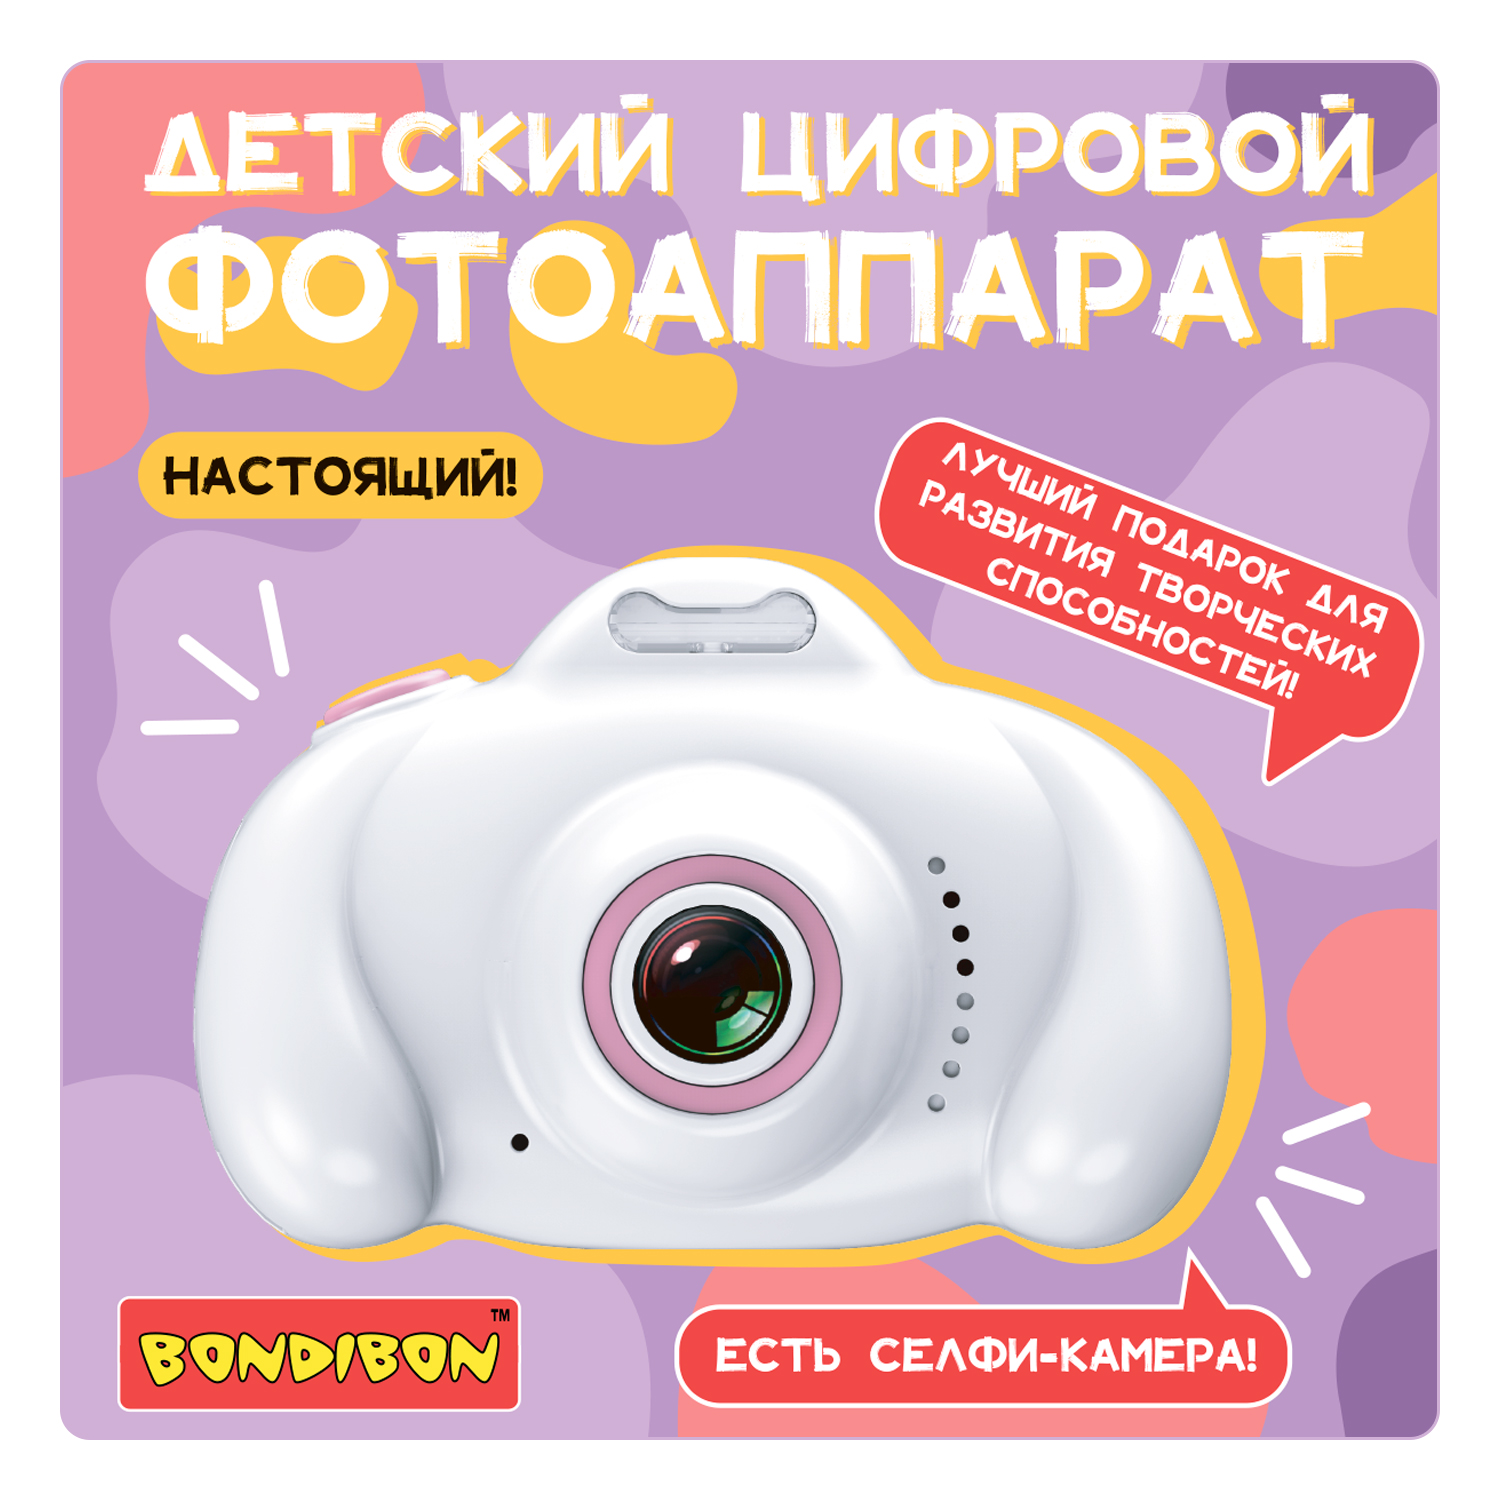 Цифровой фотоаппарат BONDIBON с селфи камерой и видео съемкой голубого цвета - фото 2